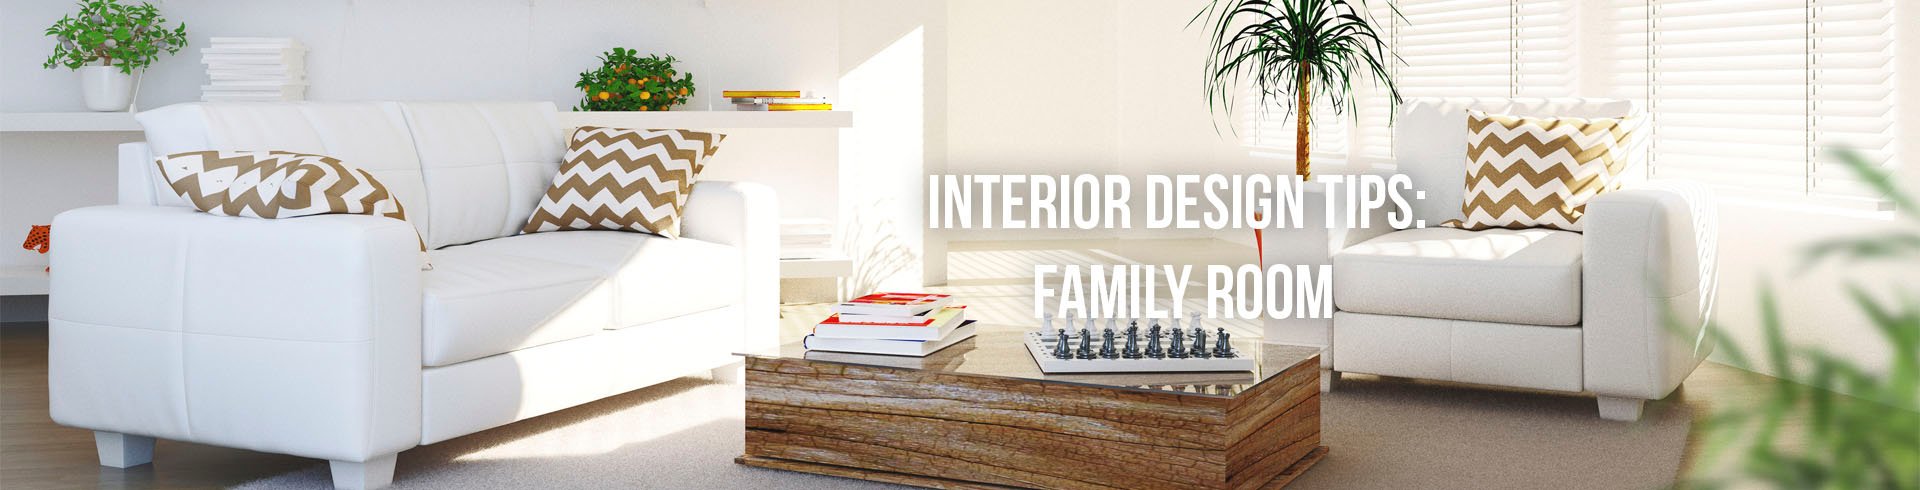 Interior Design Tips: Family Room